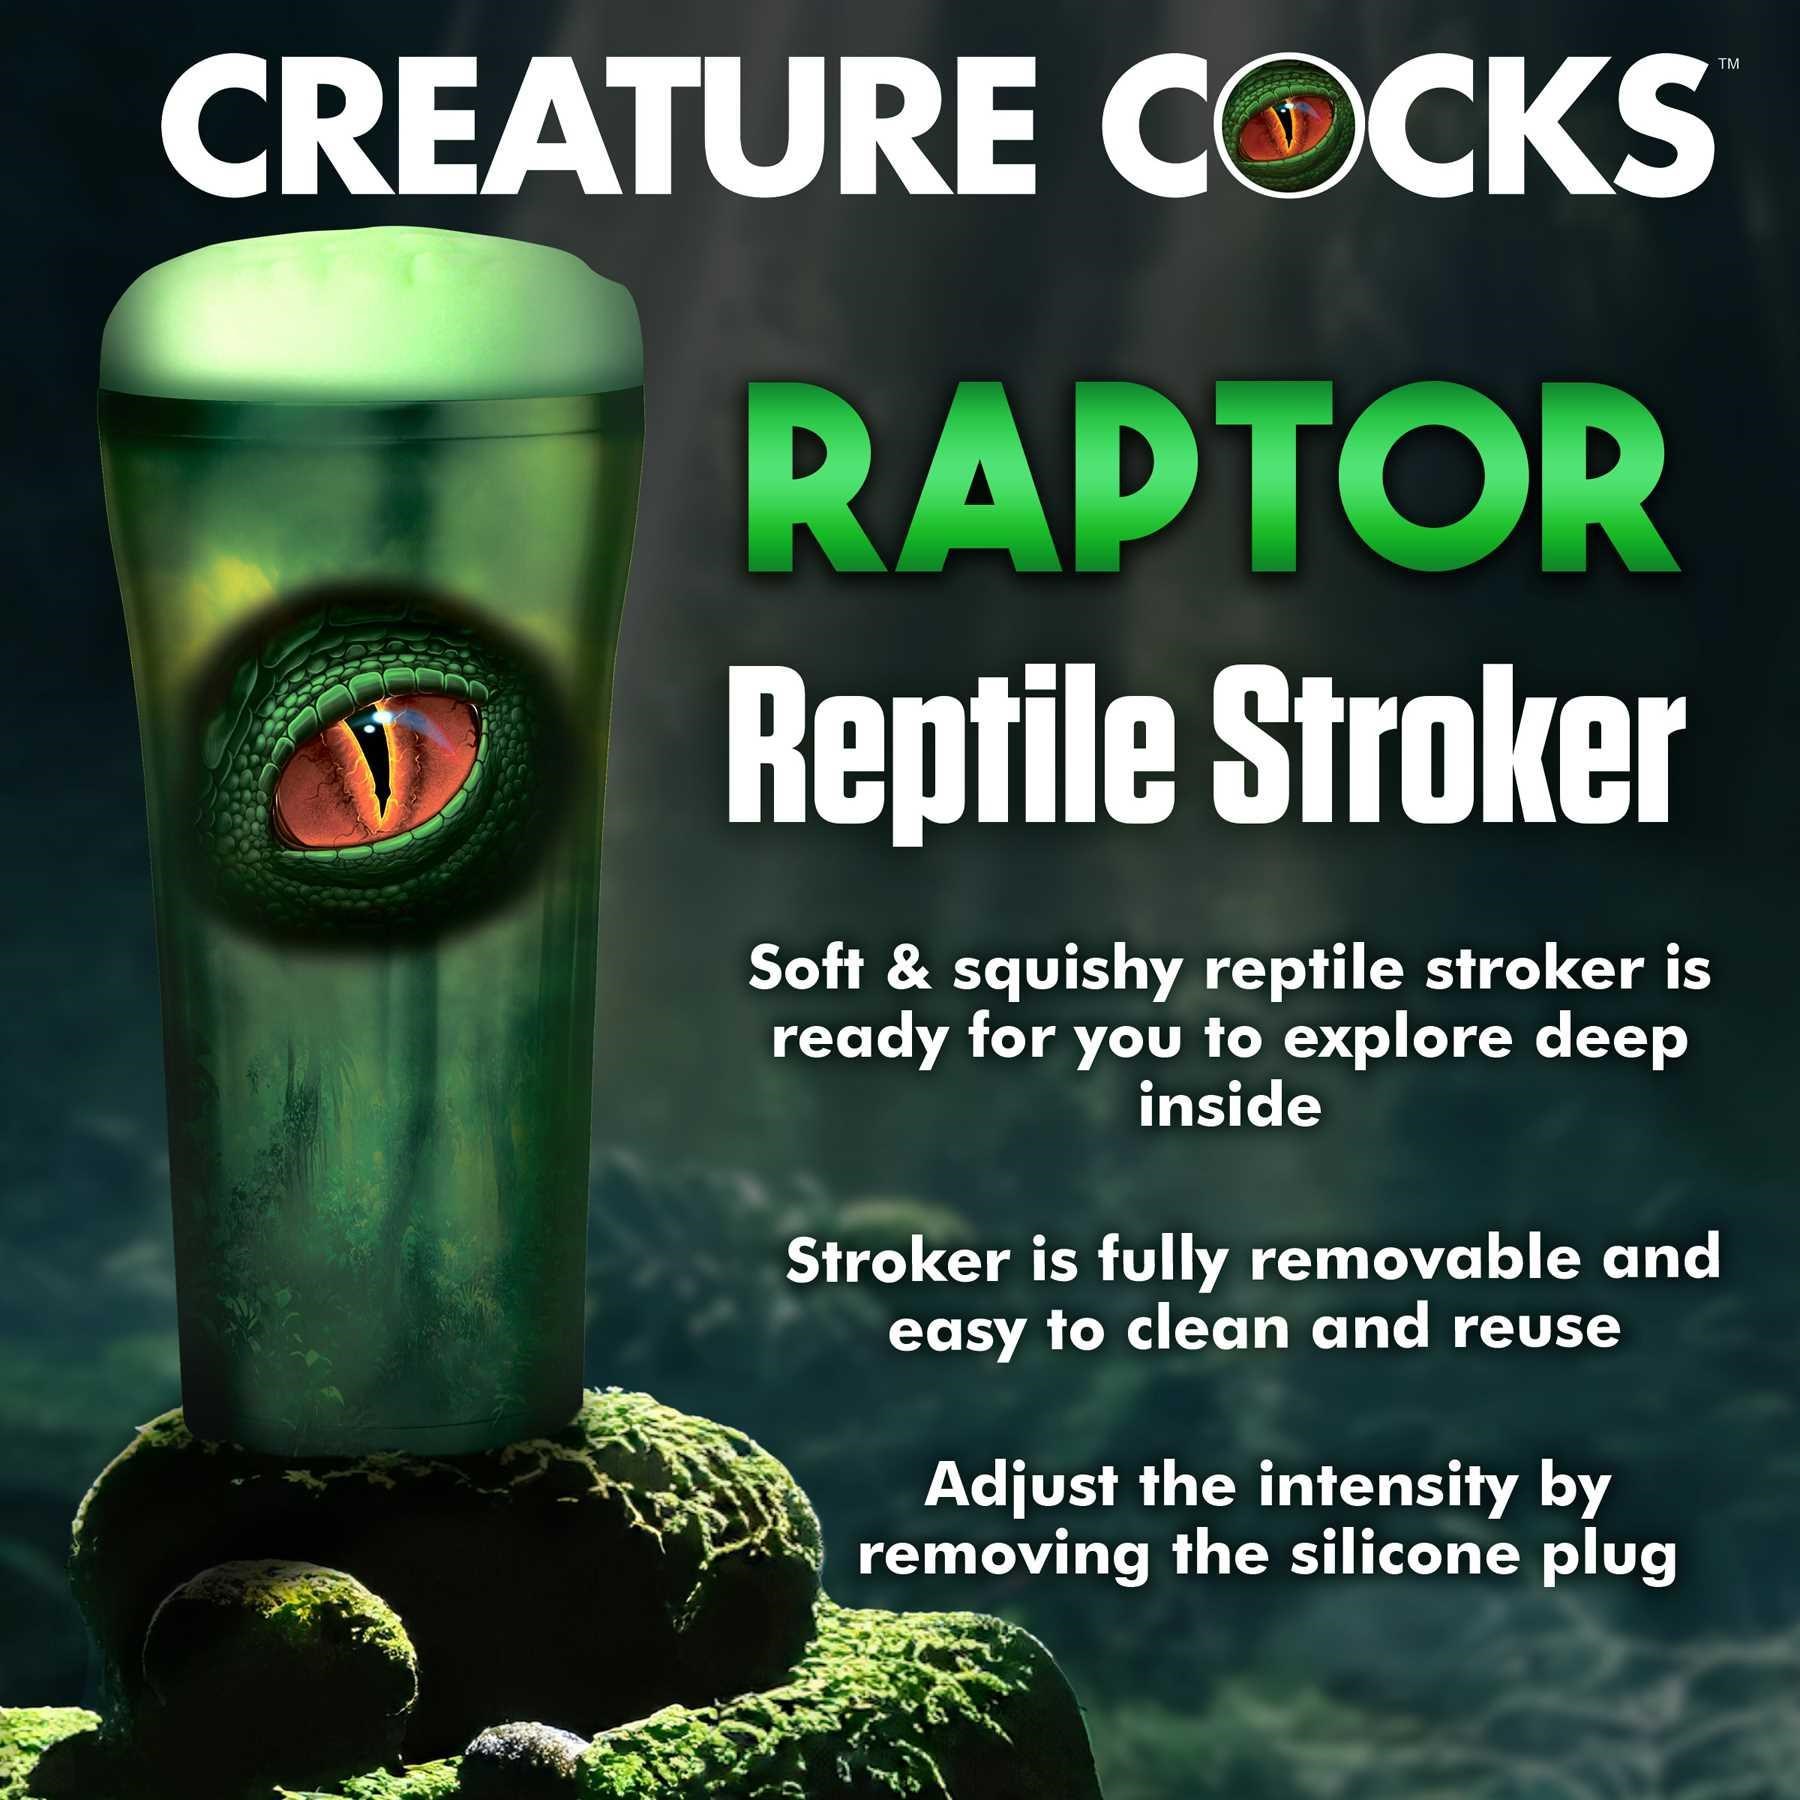 Creature Cocks Raptor Reptile Stroker